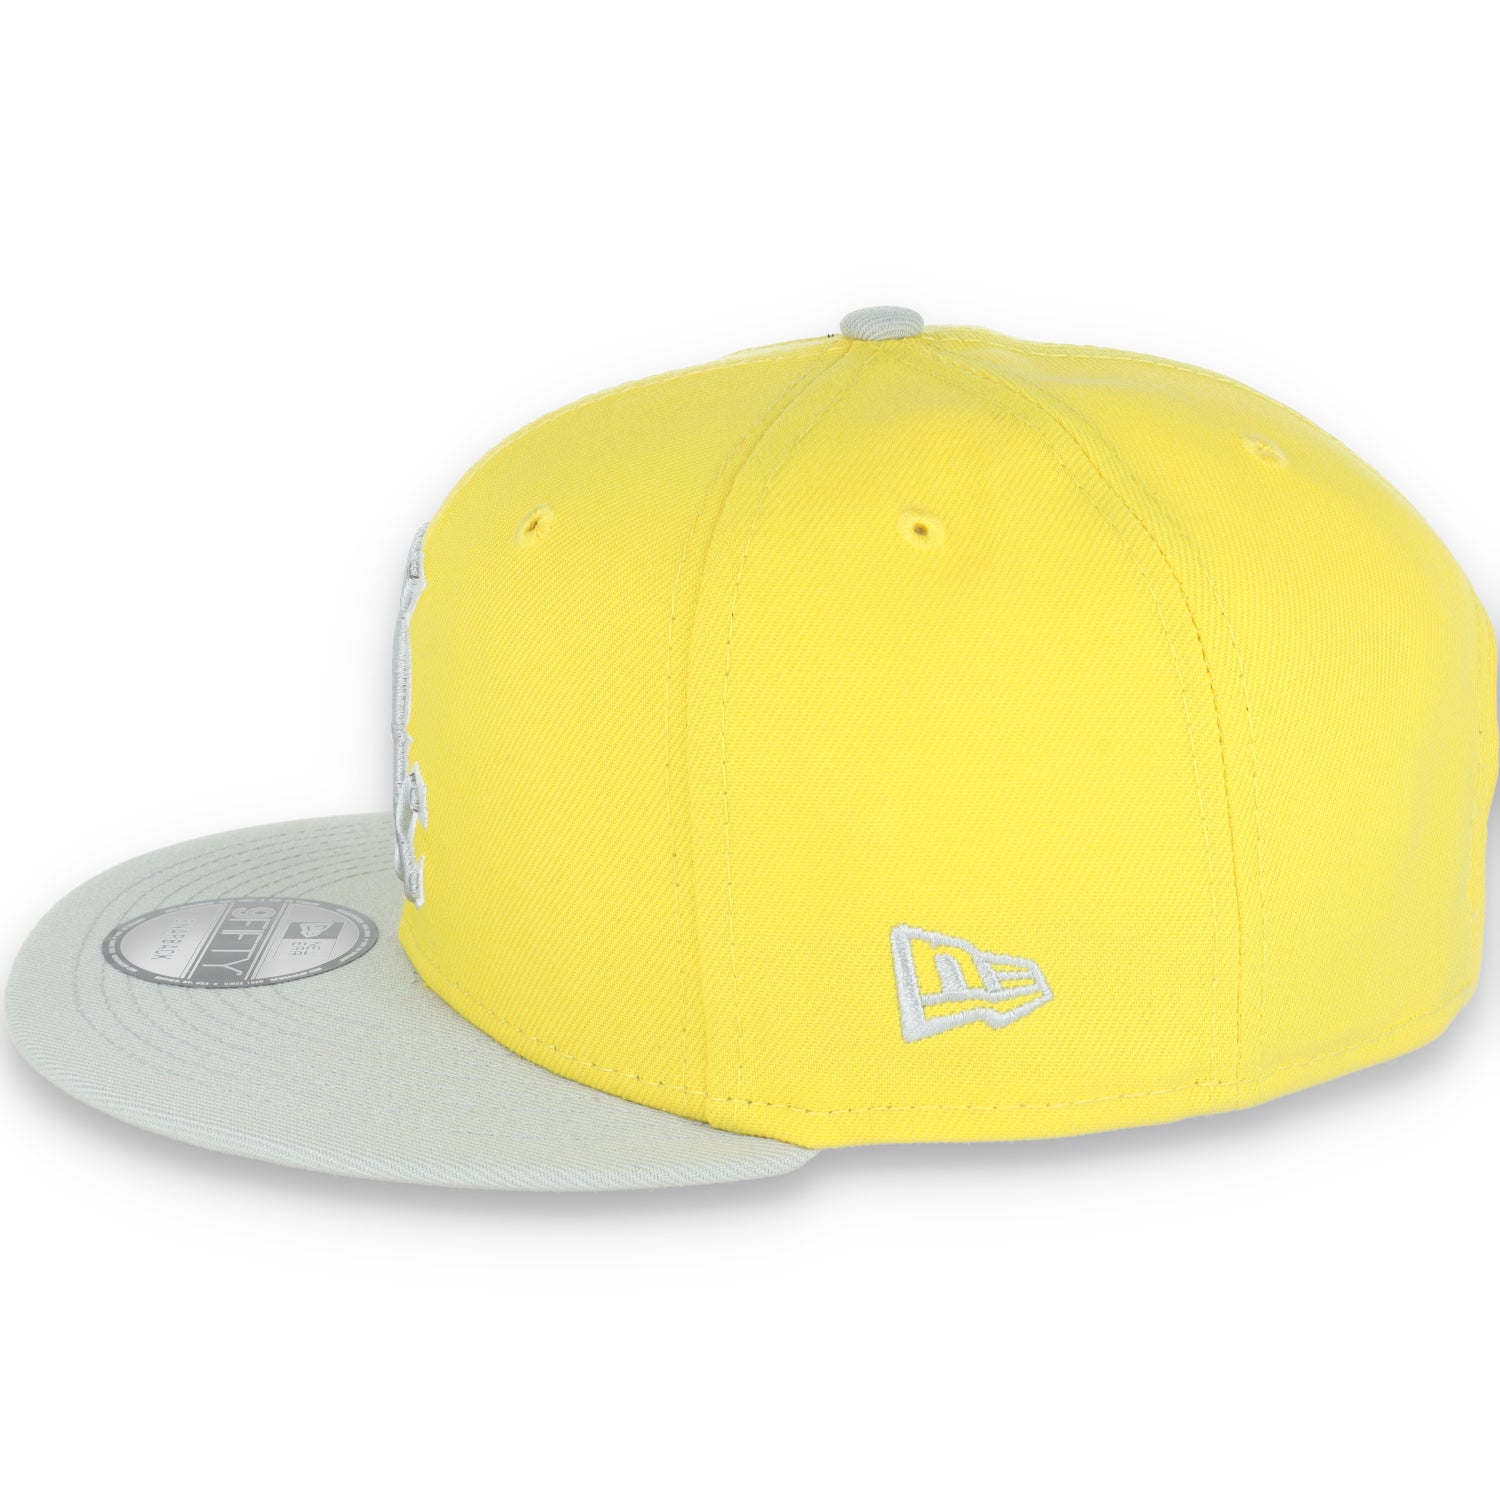 New Era White Sox Two-Tone 9FIFTY Snapback Hat-Grey/Yellow